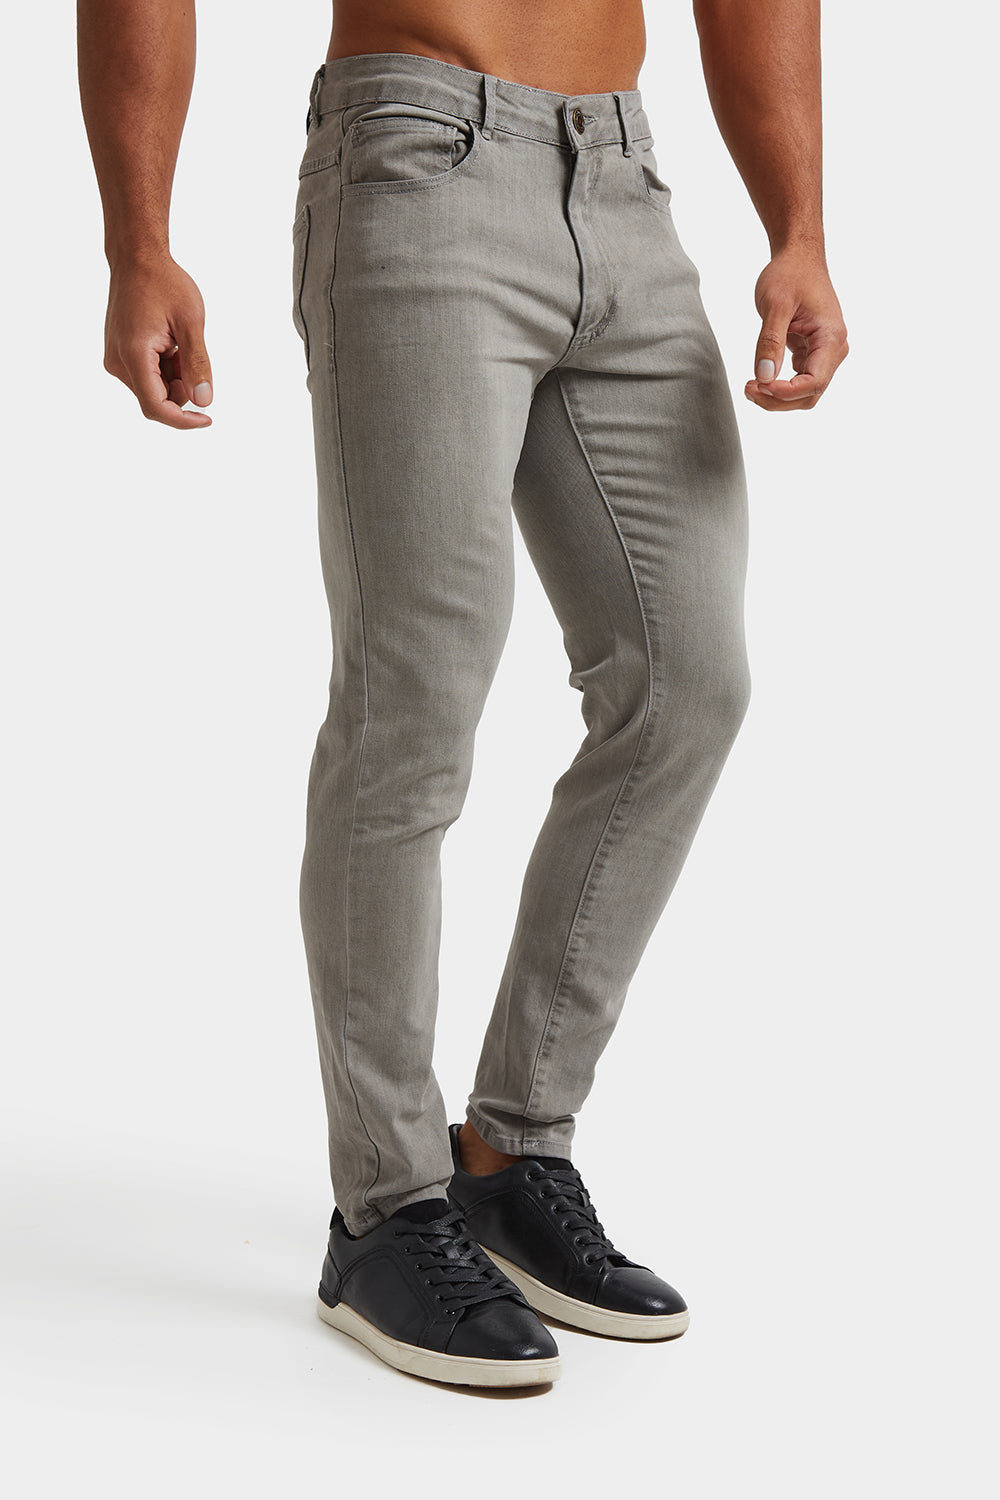 Silver Jeans Co. Jace Slim Fit Bootcut Jeans - 20873113 | HSN